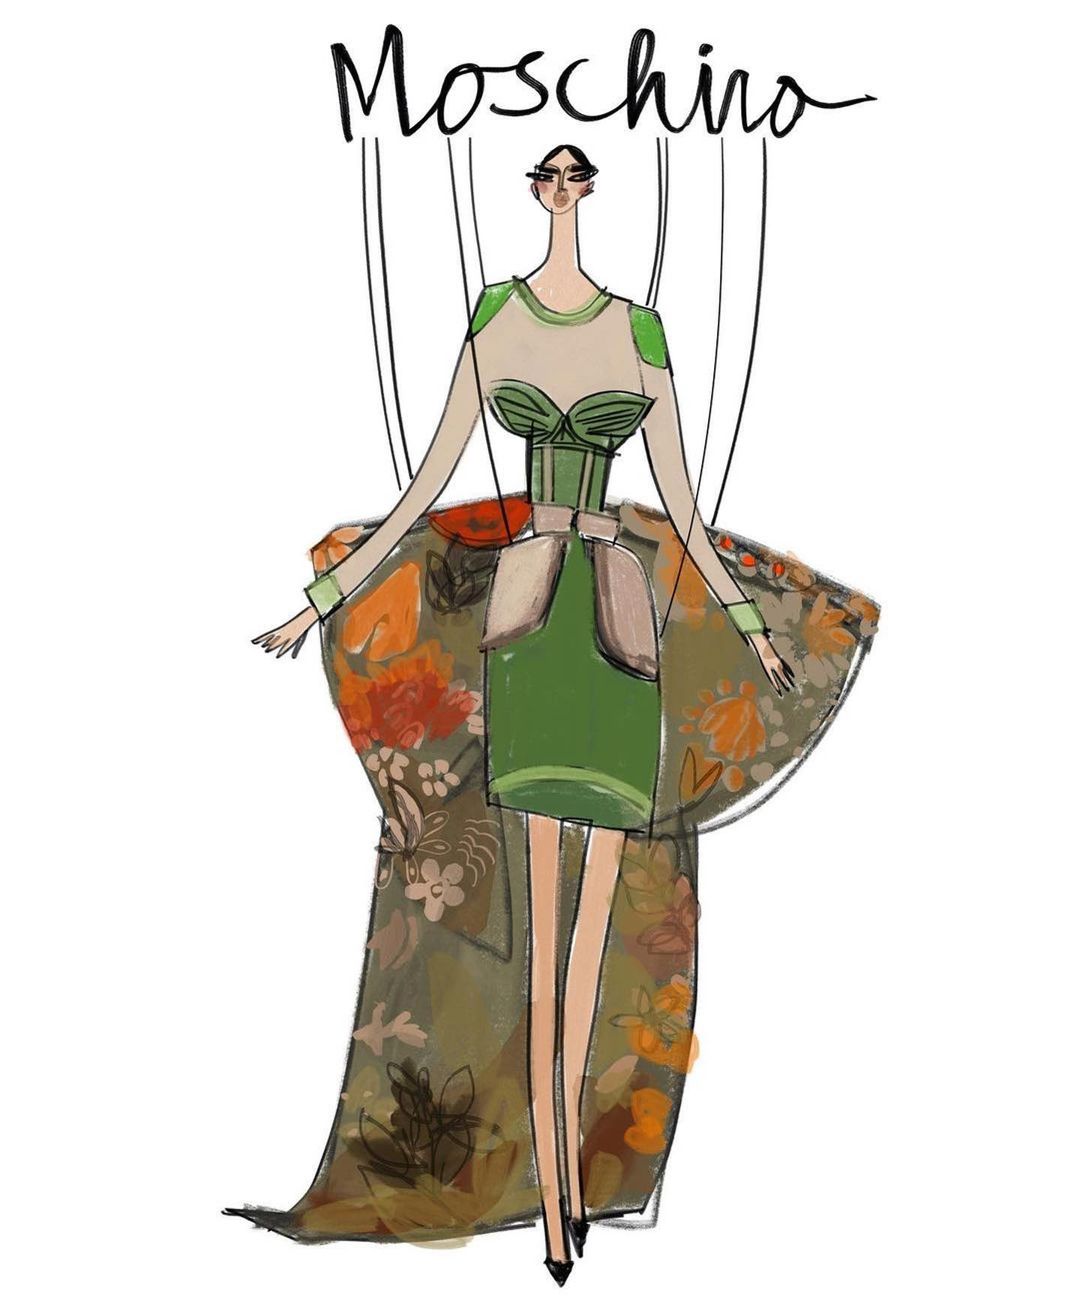 Moschino - #Repost @annienaran
・・・
Monday morning dreaming in Moschino 💕 @moschino @itsjeremyscott 🌿🌸🍃#moschino #art #artist #artwork #itsjeremyscott #style #couture #runway #fashionweek #fashionsketc...